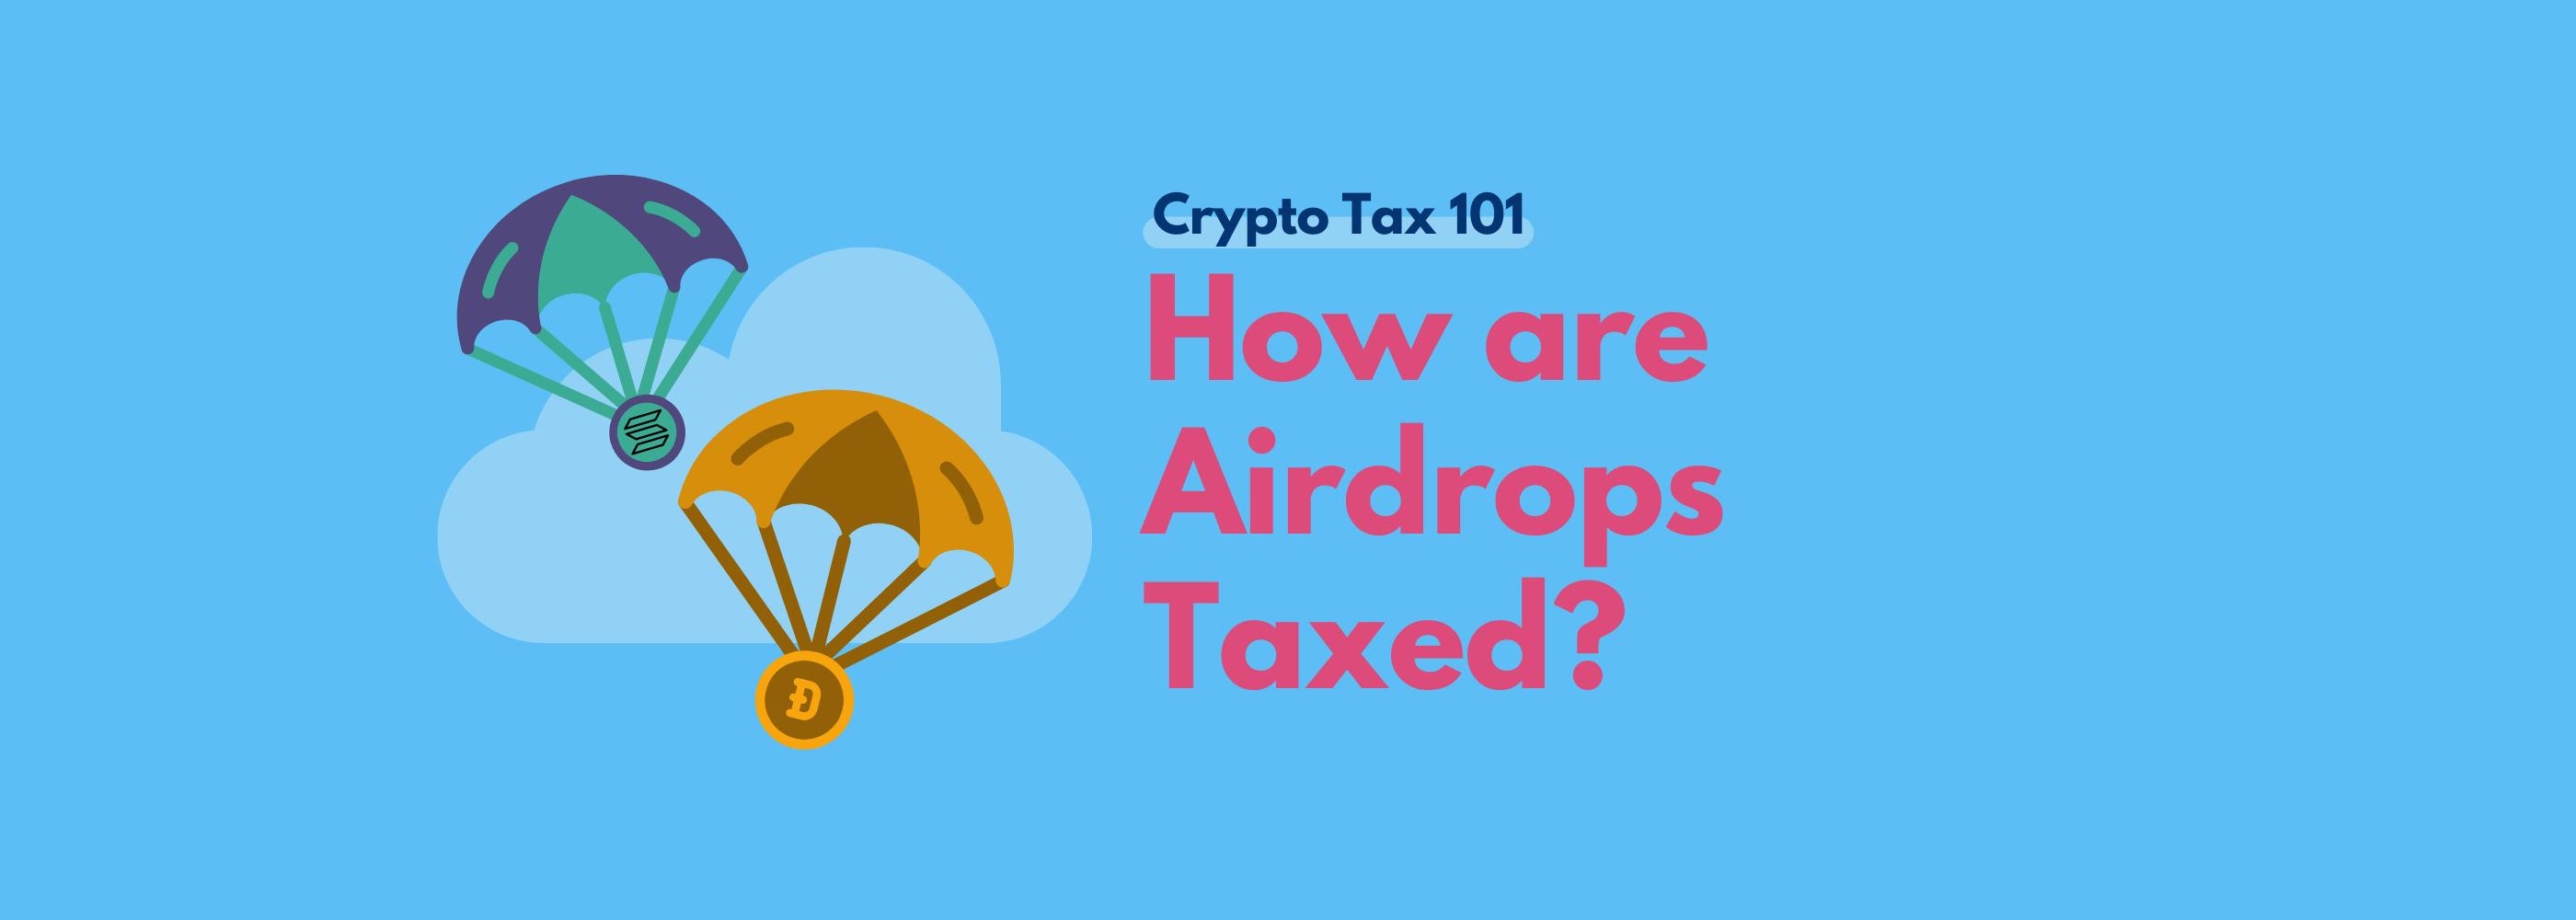 Crypto should airdrops be taxed bitcoin trojan